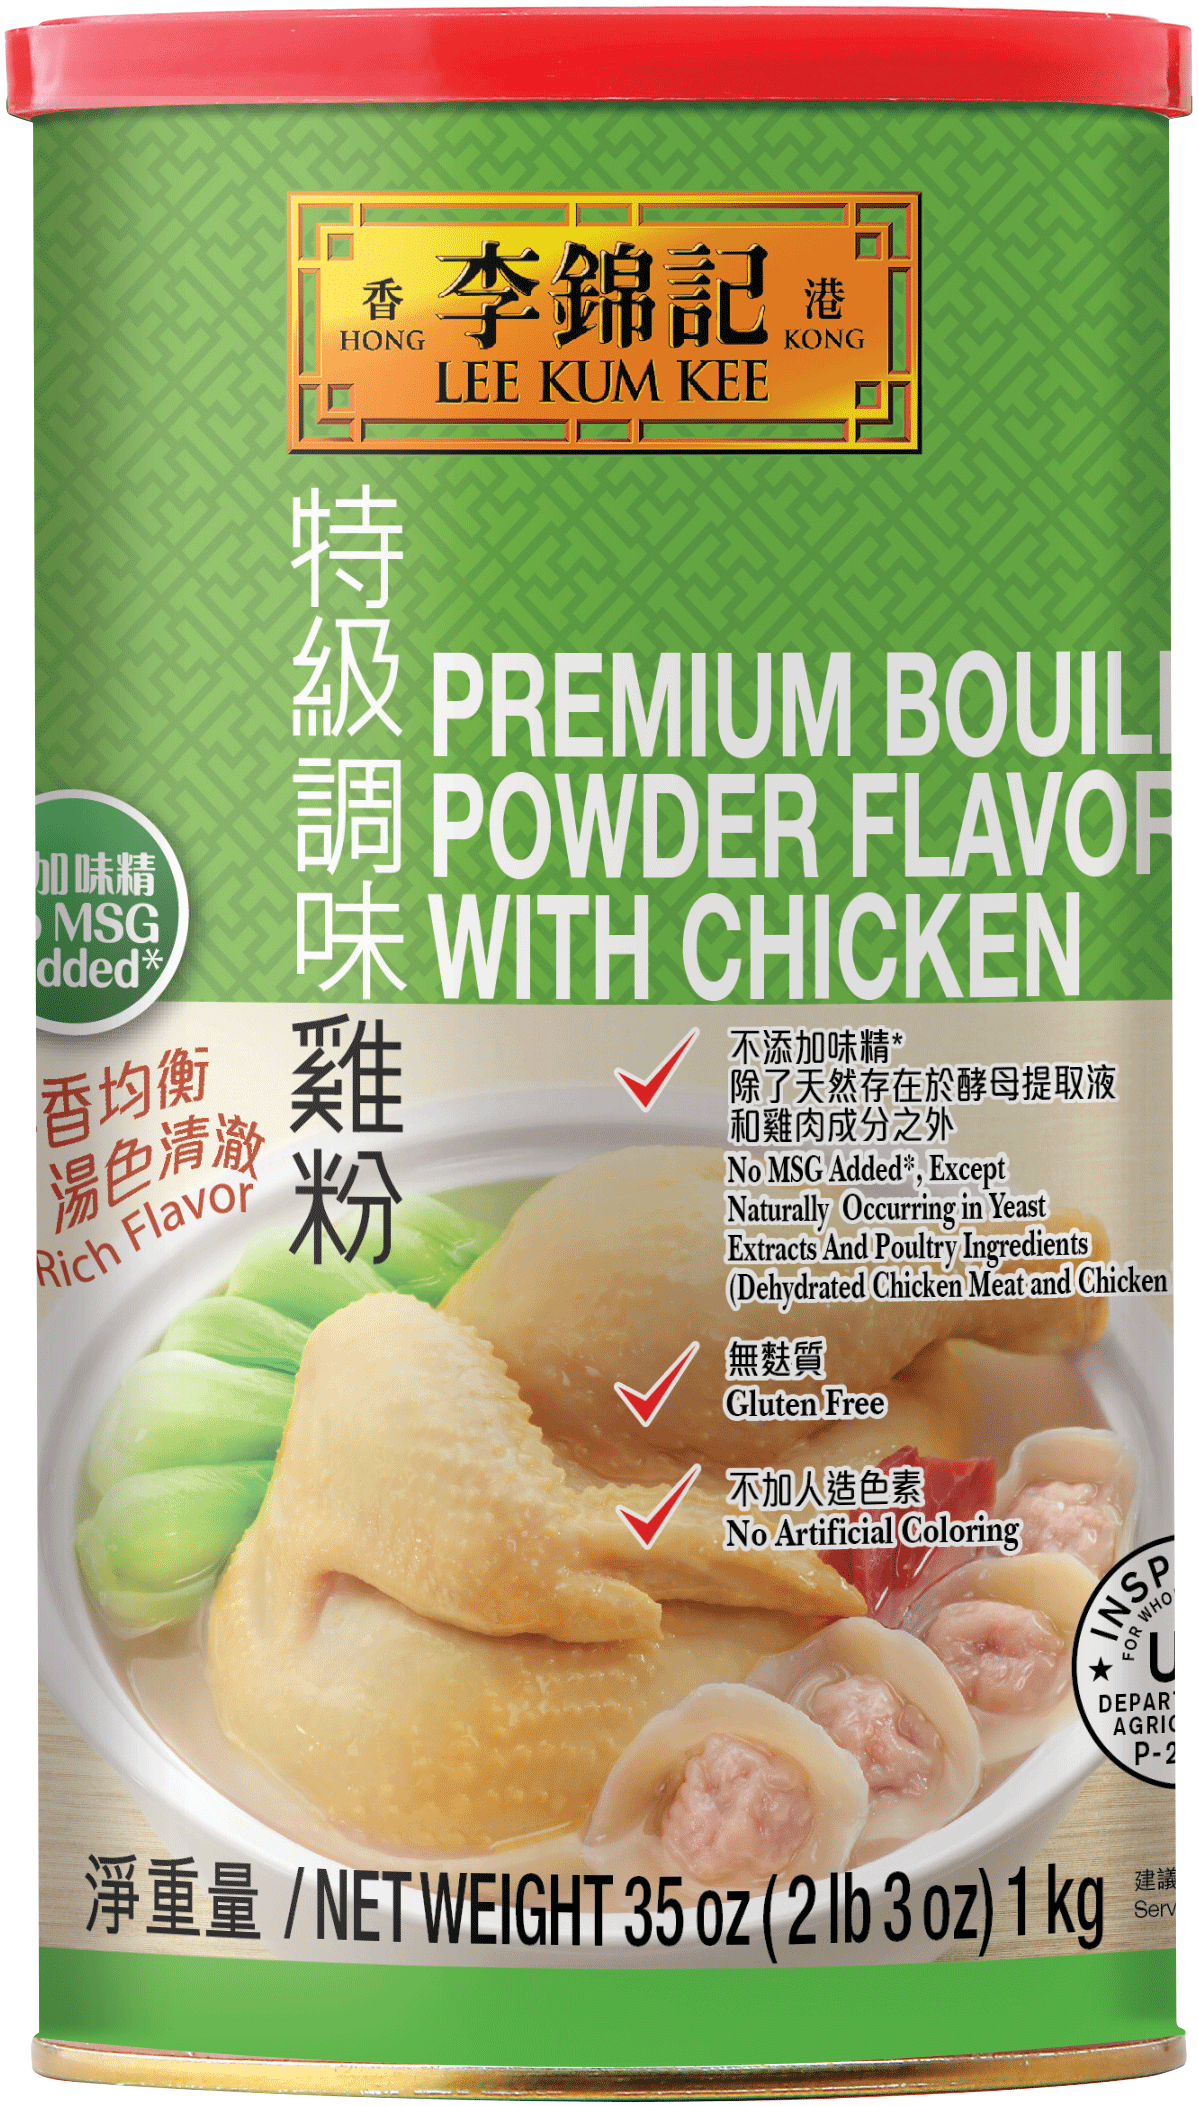 Premium Bouillon Powder Flavored With Chicken No MSG Added | USA